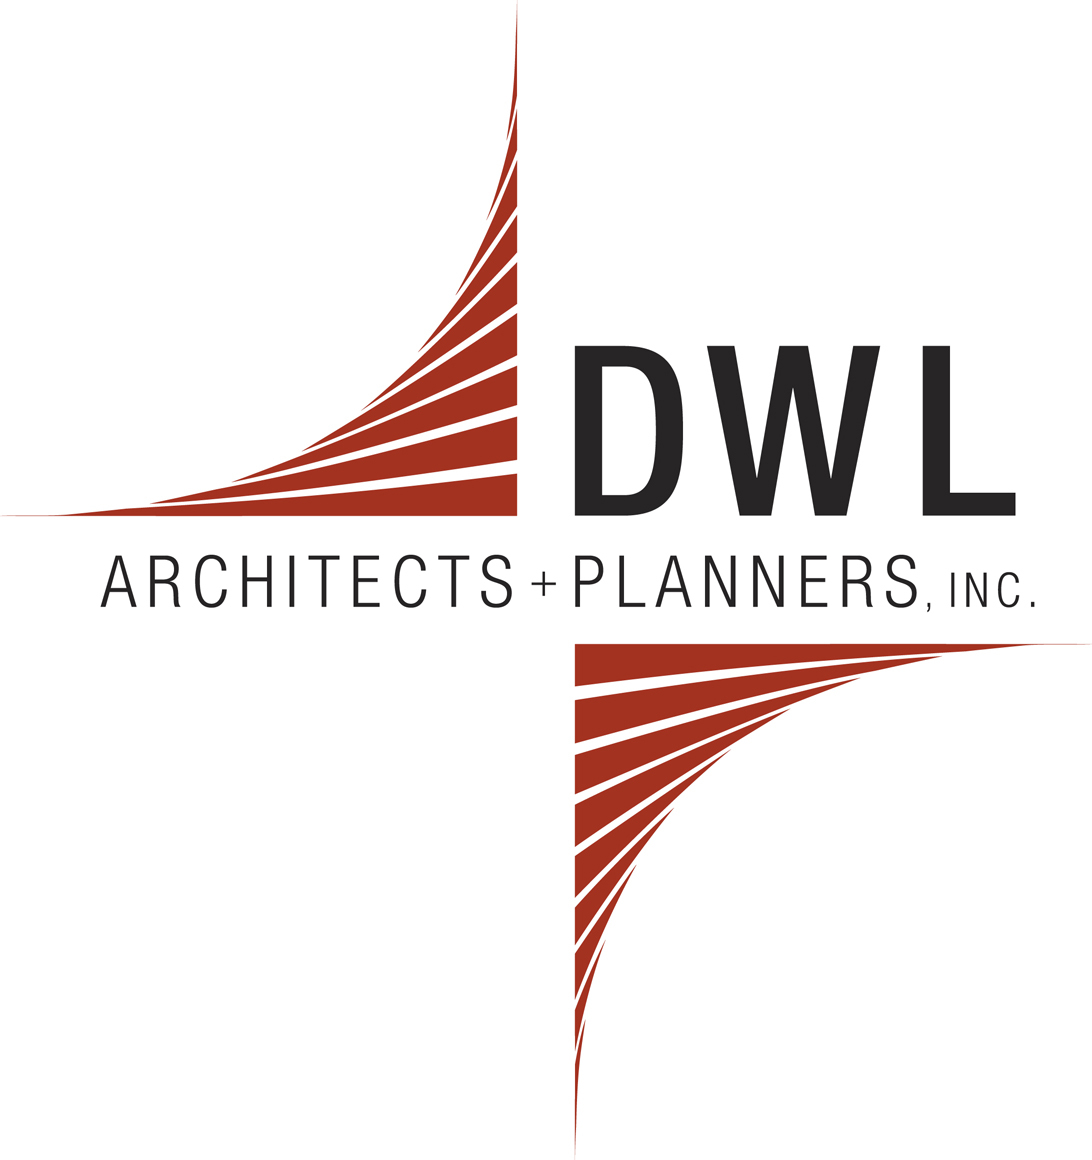 dwl architexts + planners logo